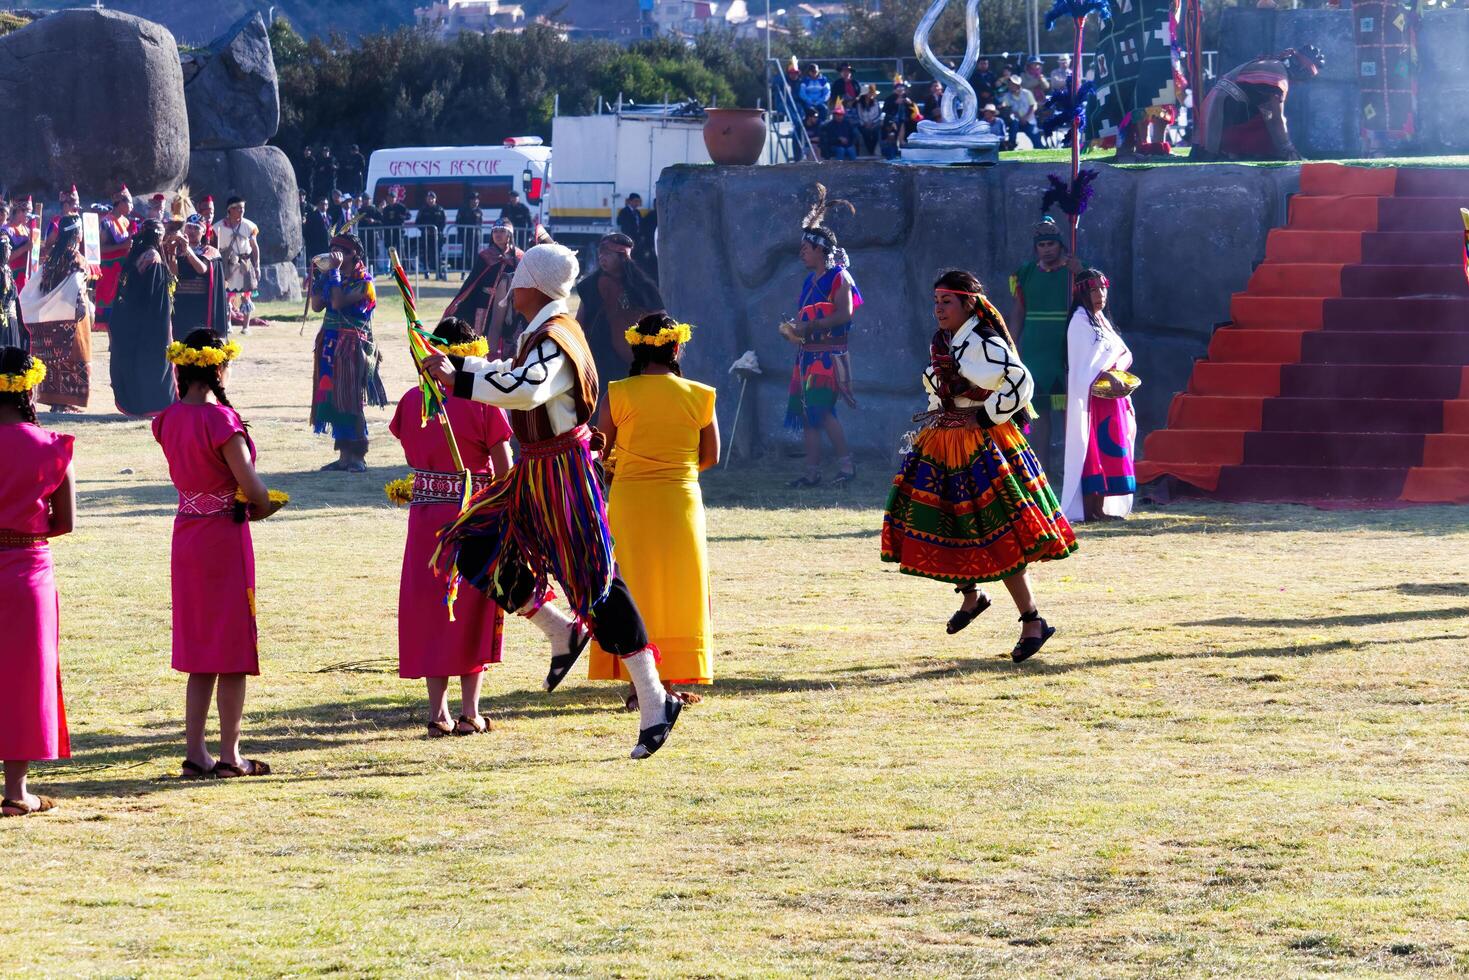 cusco, Peru, 2015 - inti Raymi homens e mulheres dentro tradicional fantasias foto